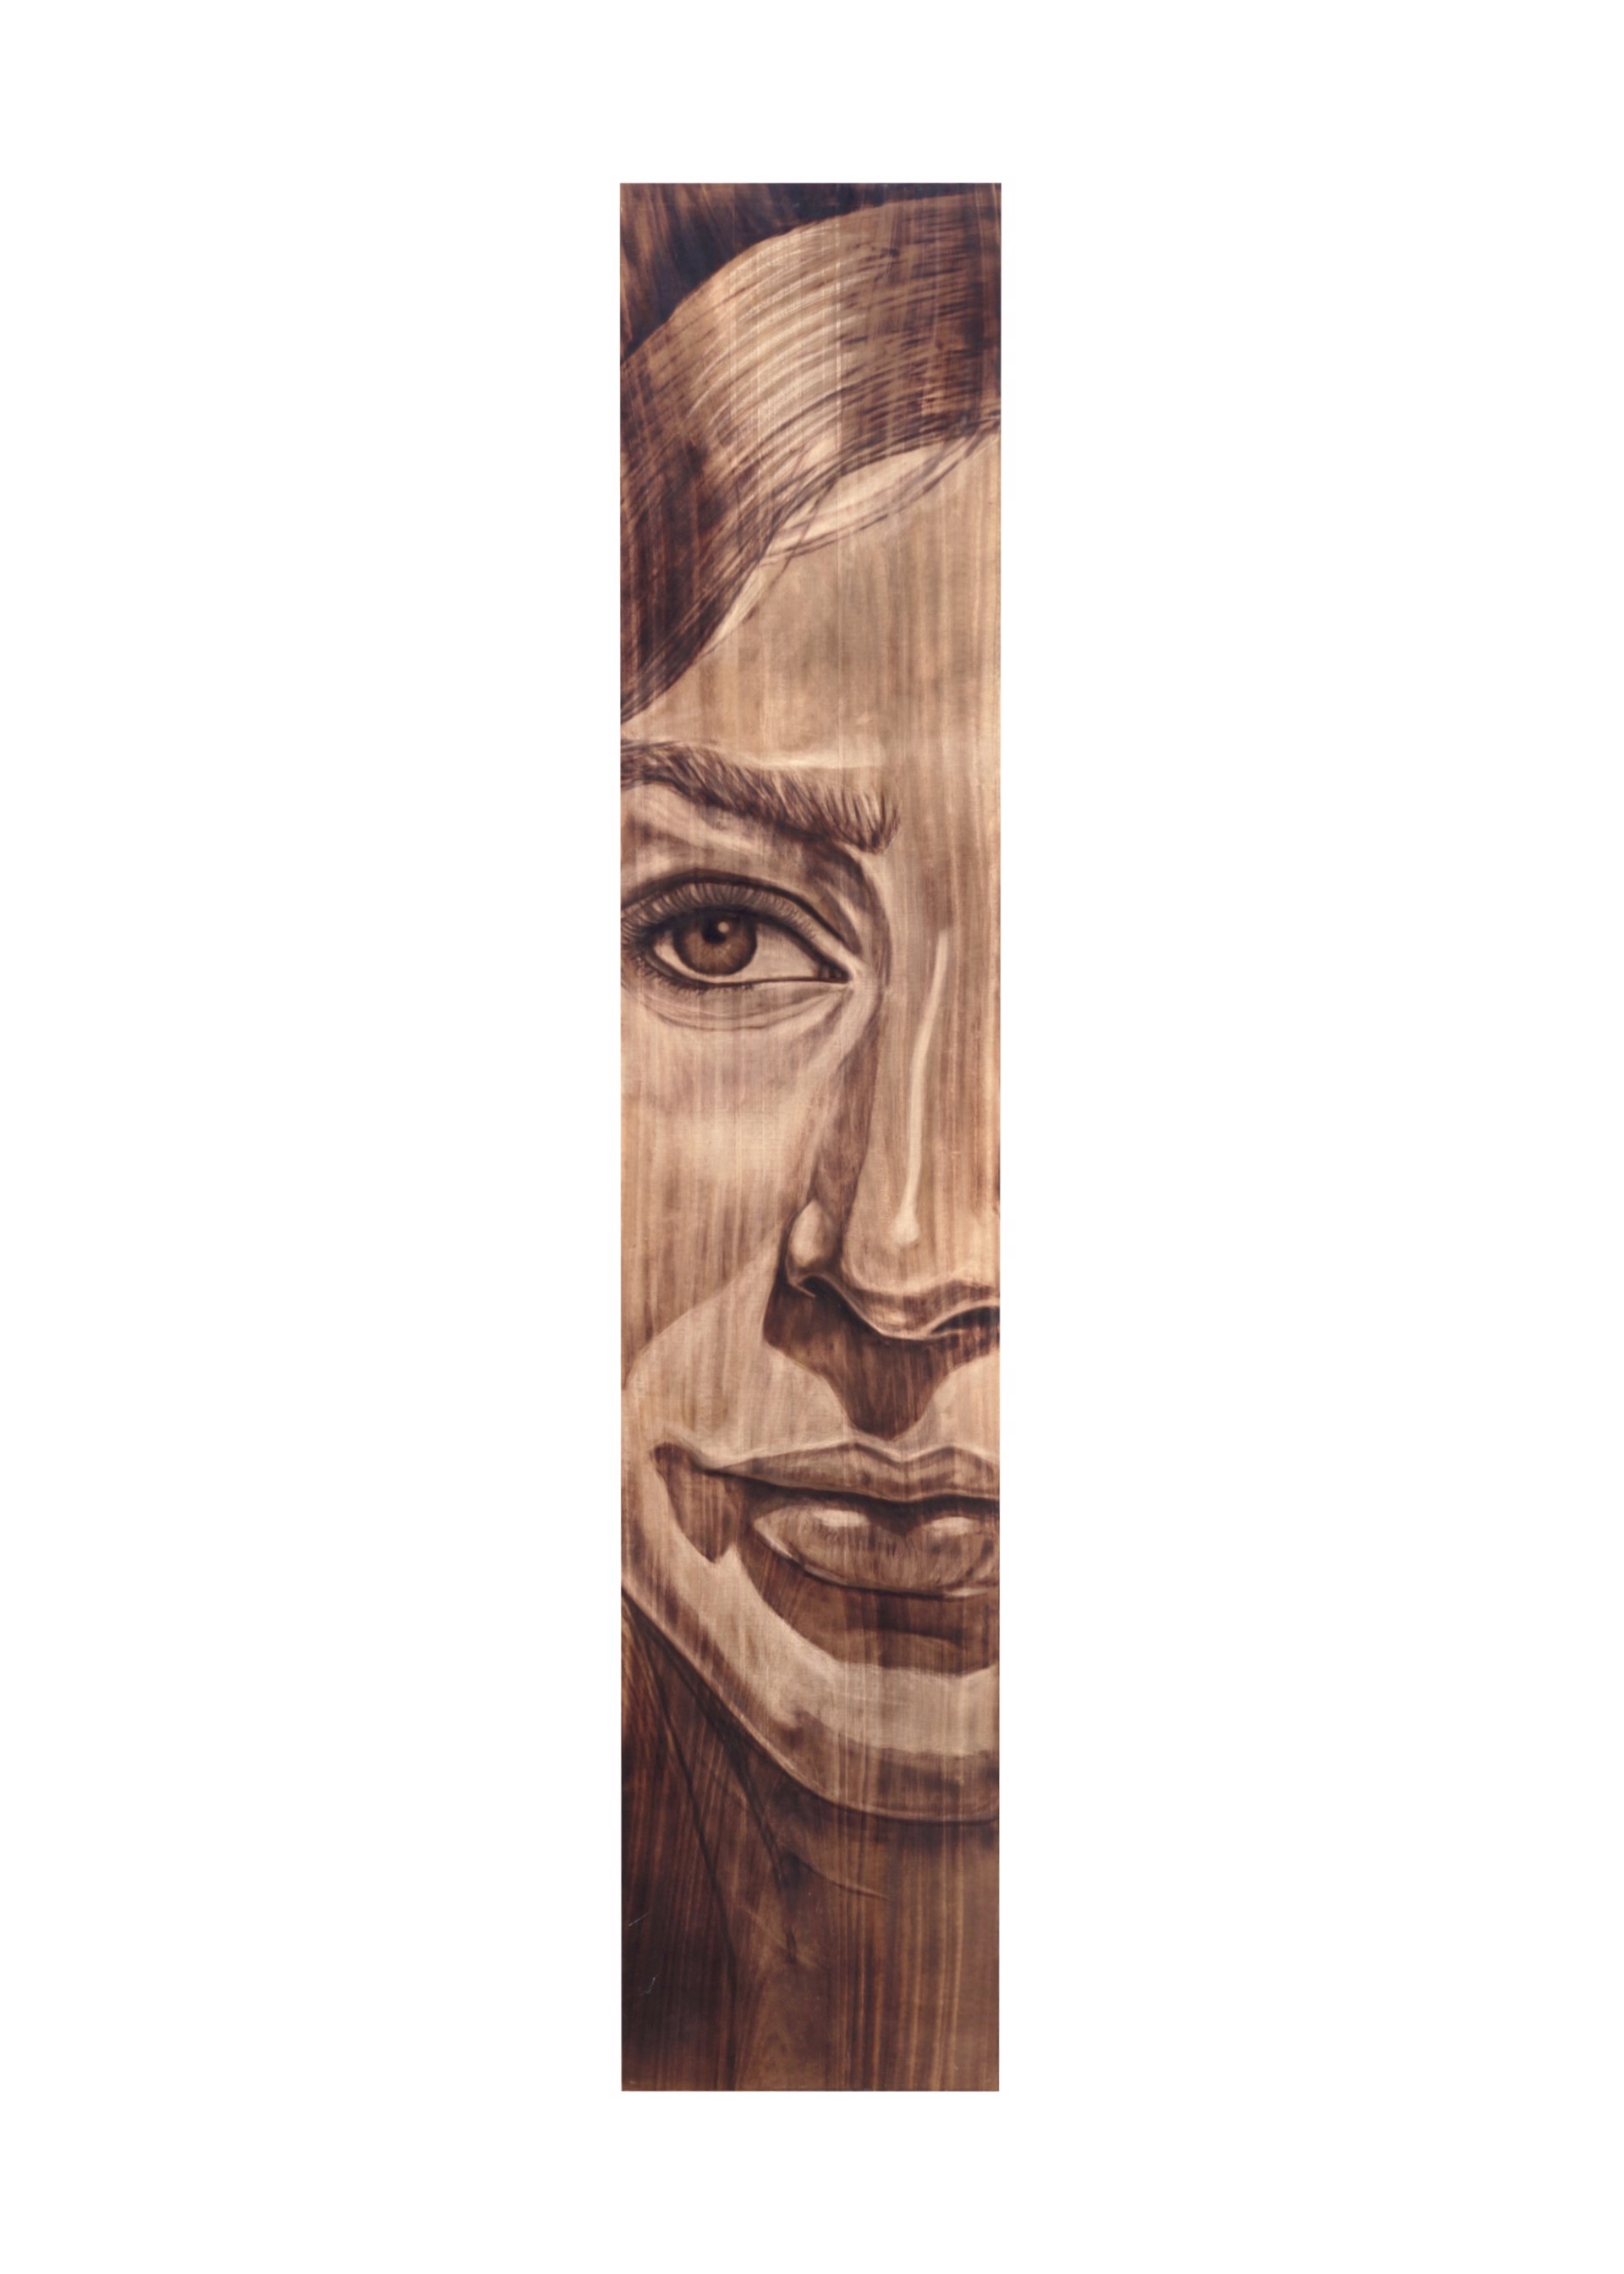 Wood Panel 3 by Zachary Aronson